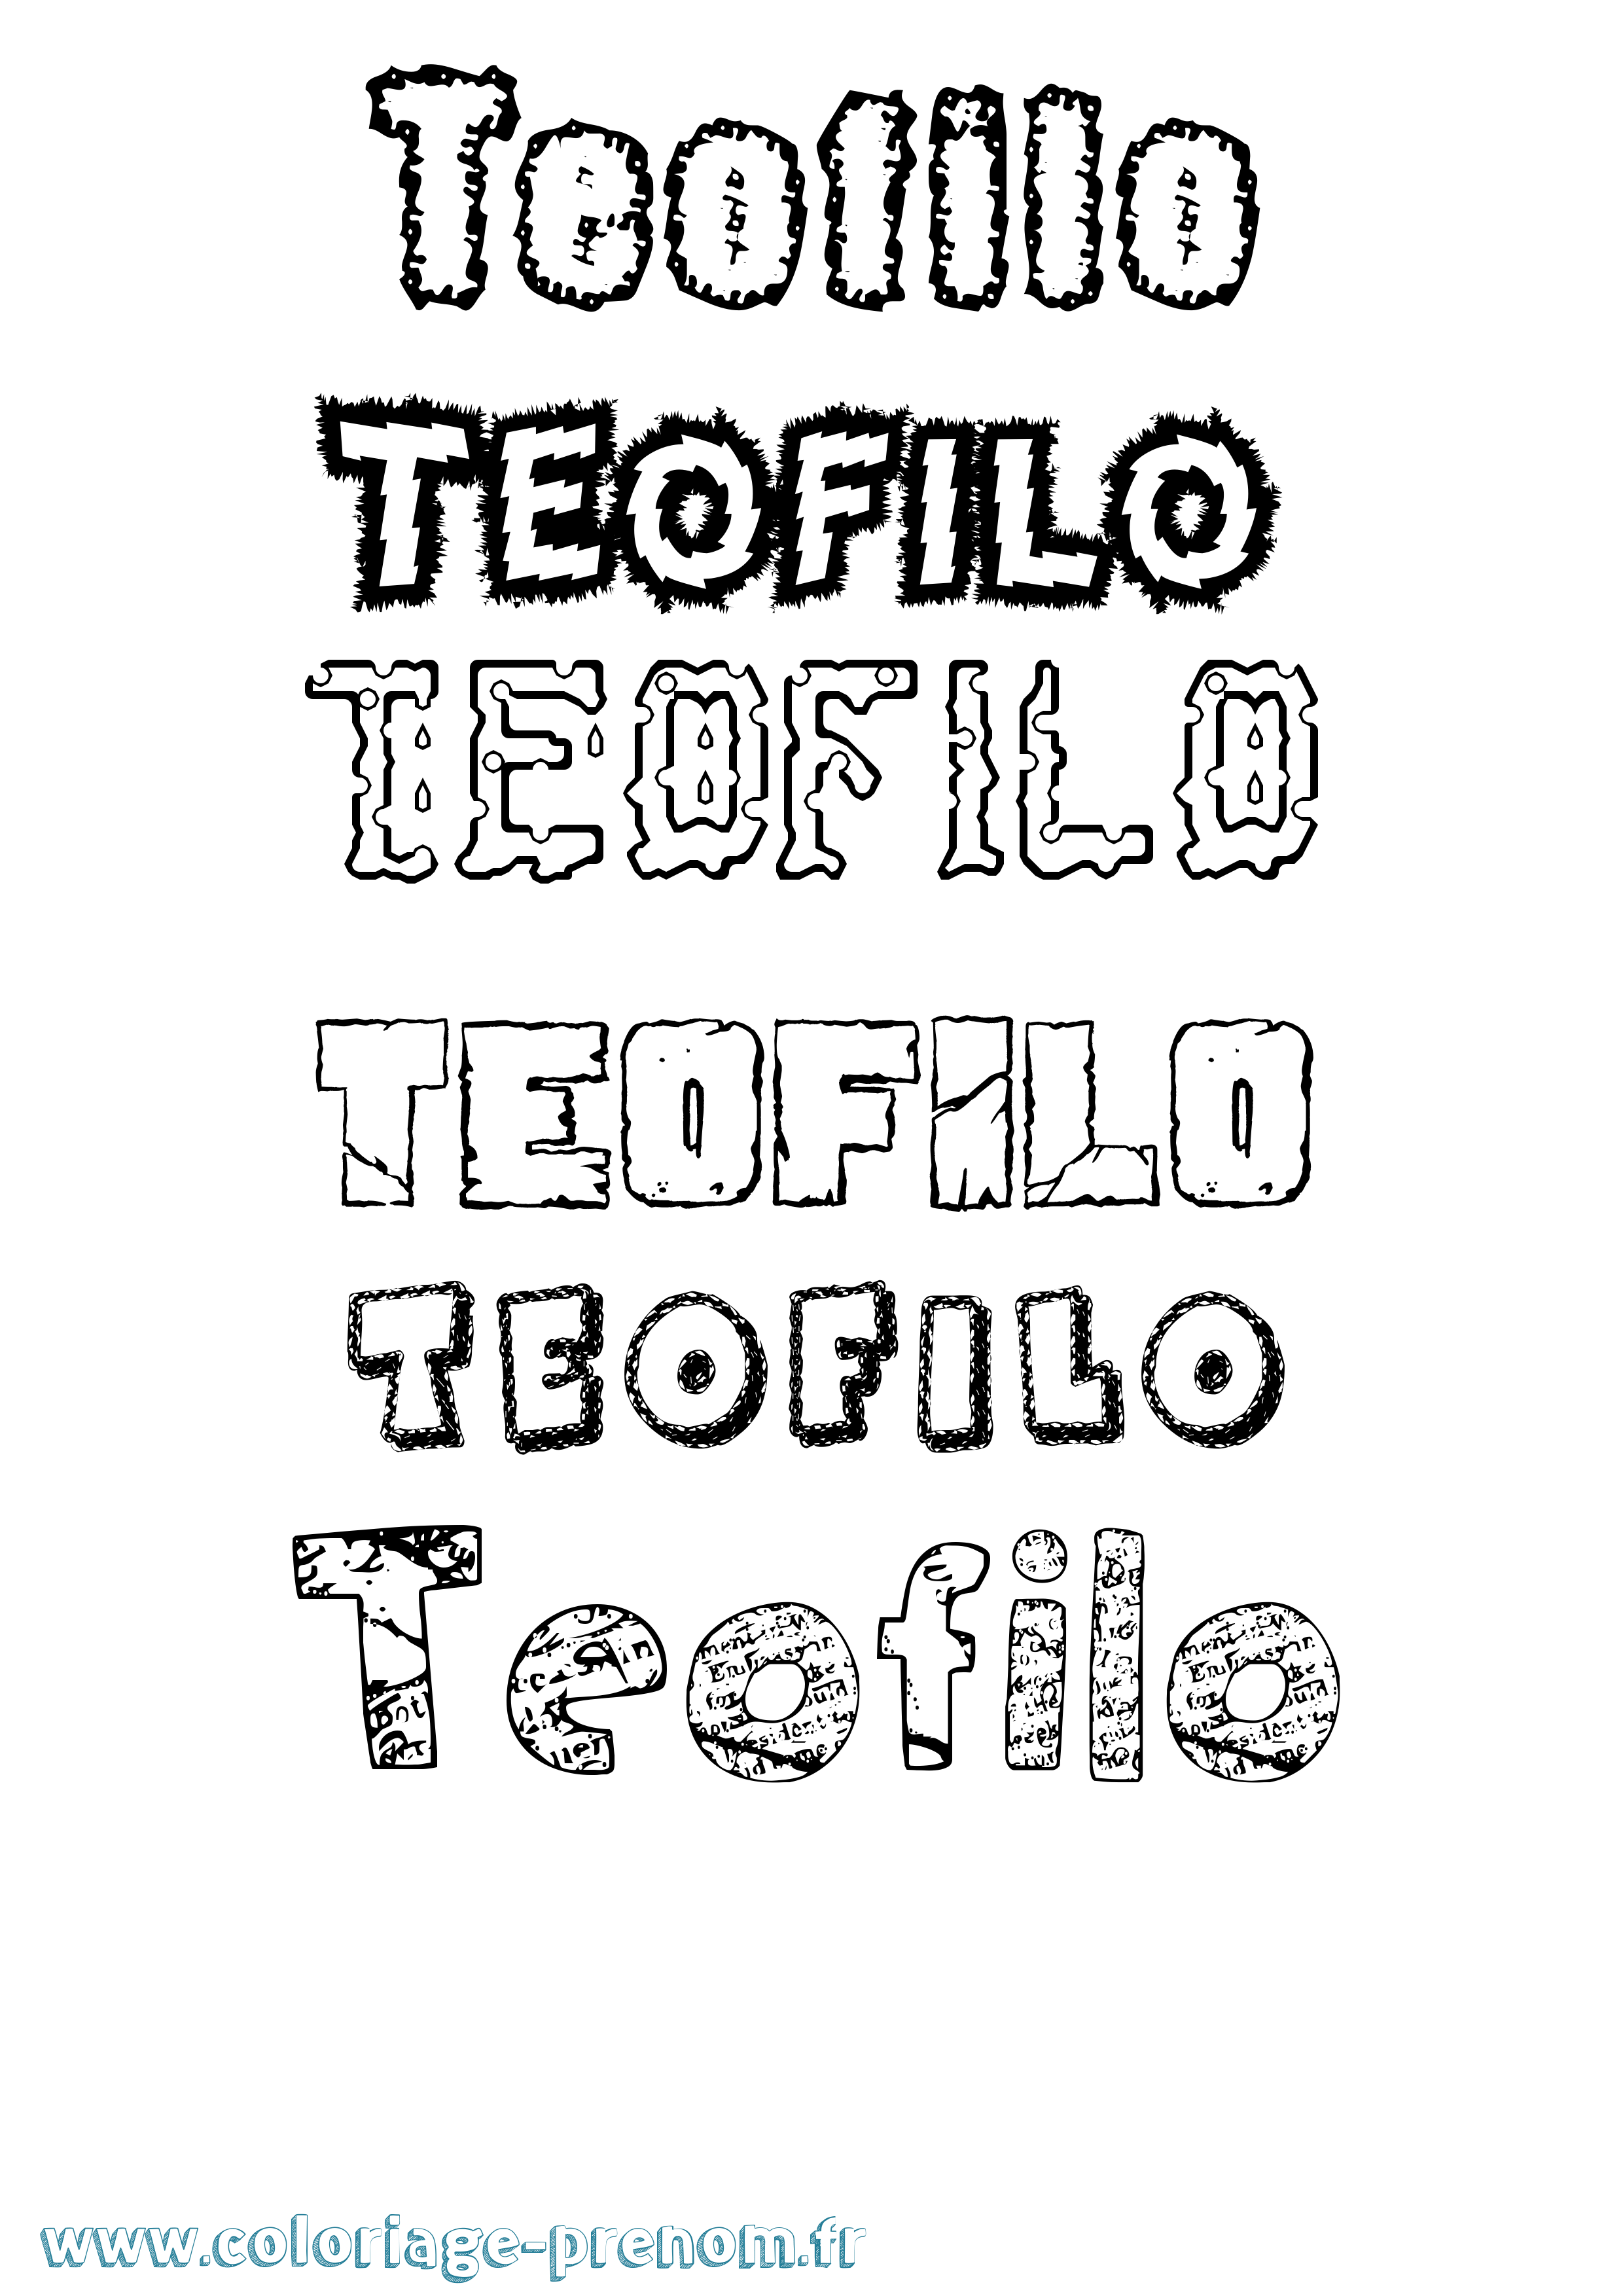 Coloriage prénom Teofilo Destructuré